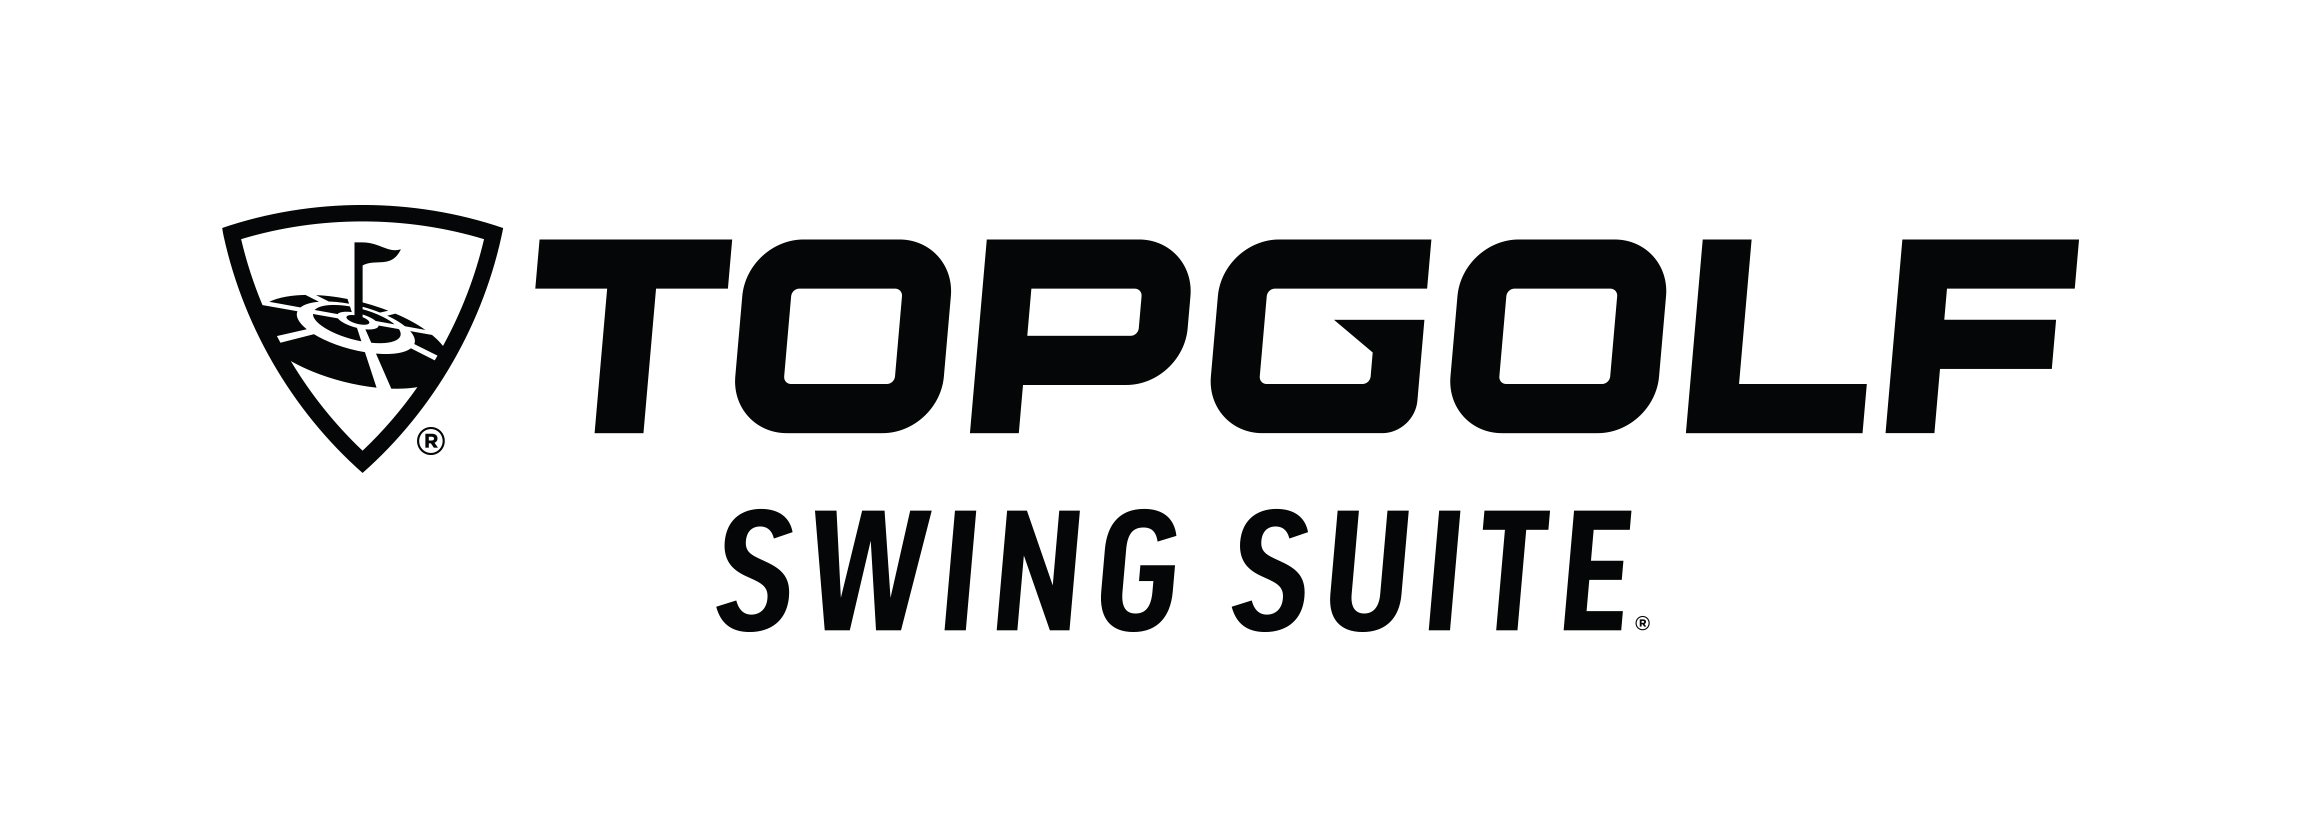 TopGolf Swing Suite Logo